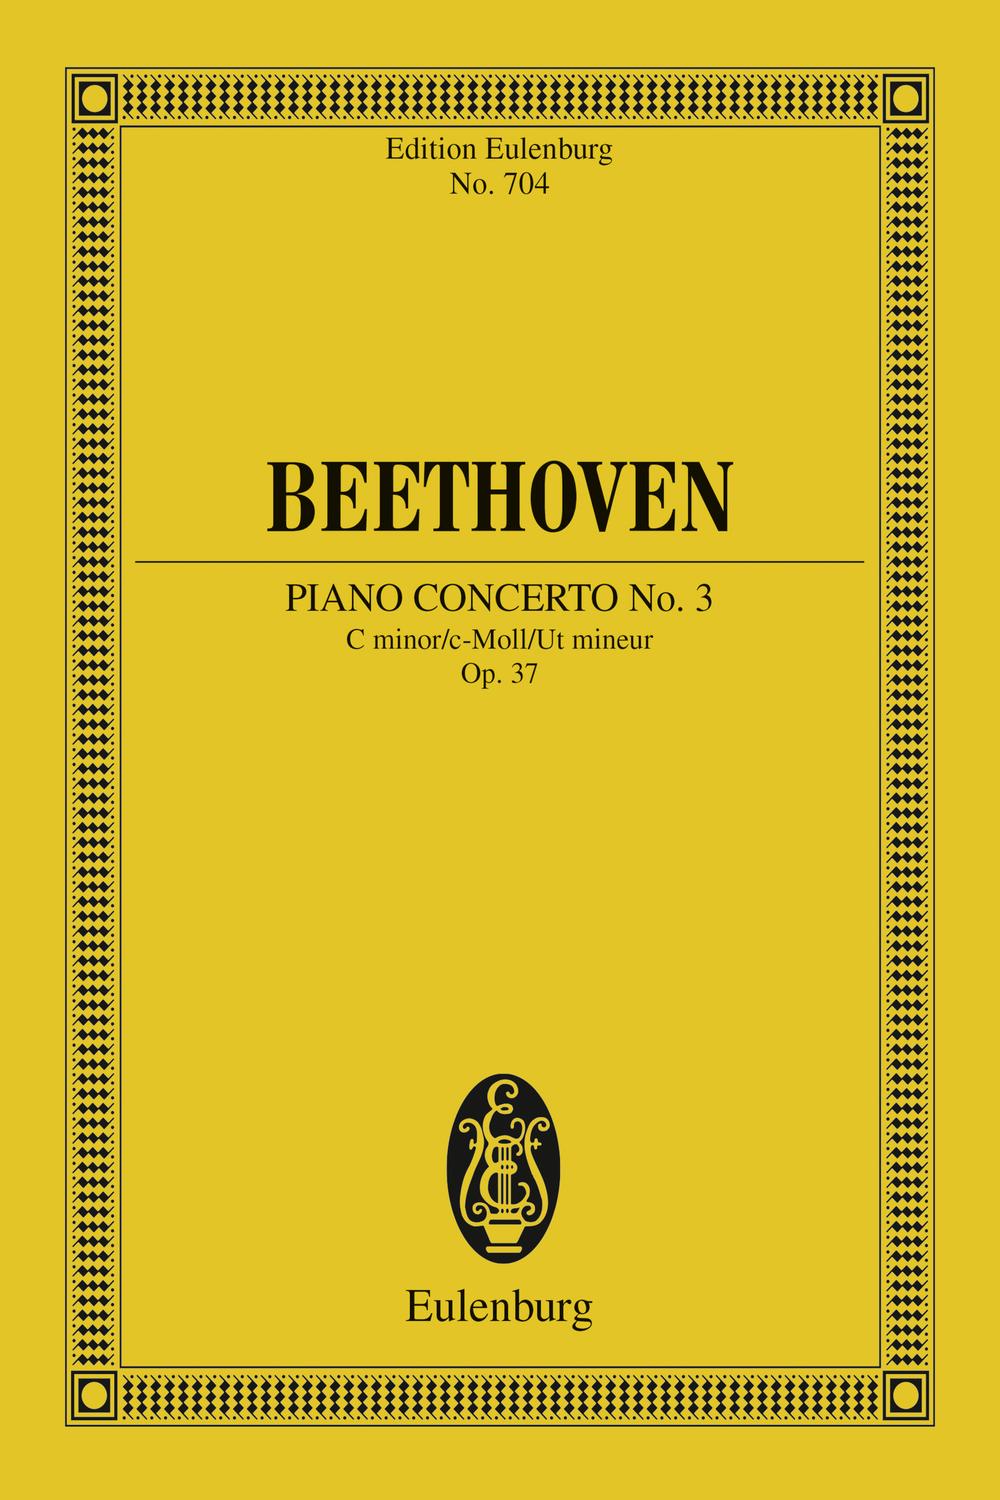 Piano Concerto No. 3 C minor - Ludwig van Beethoven,Richard Clarke,Richard Clarke